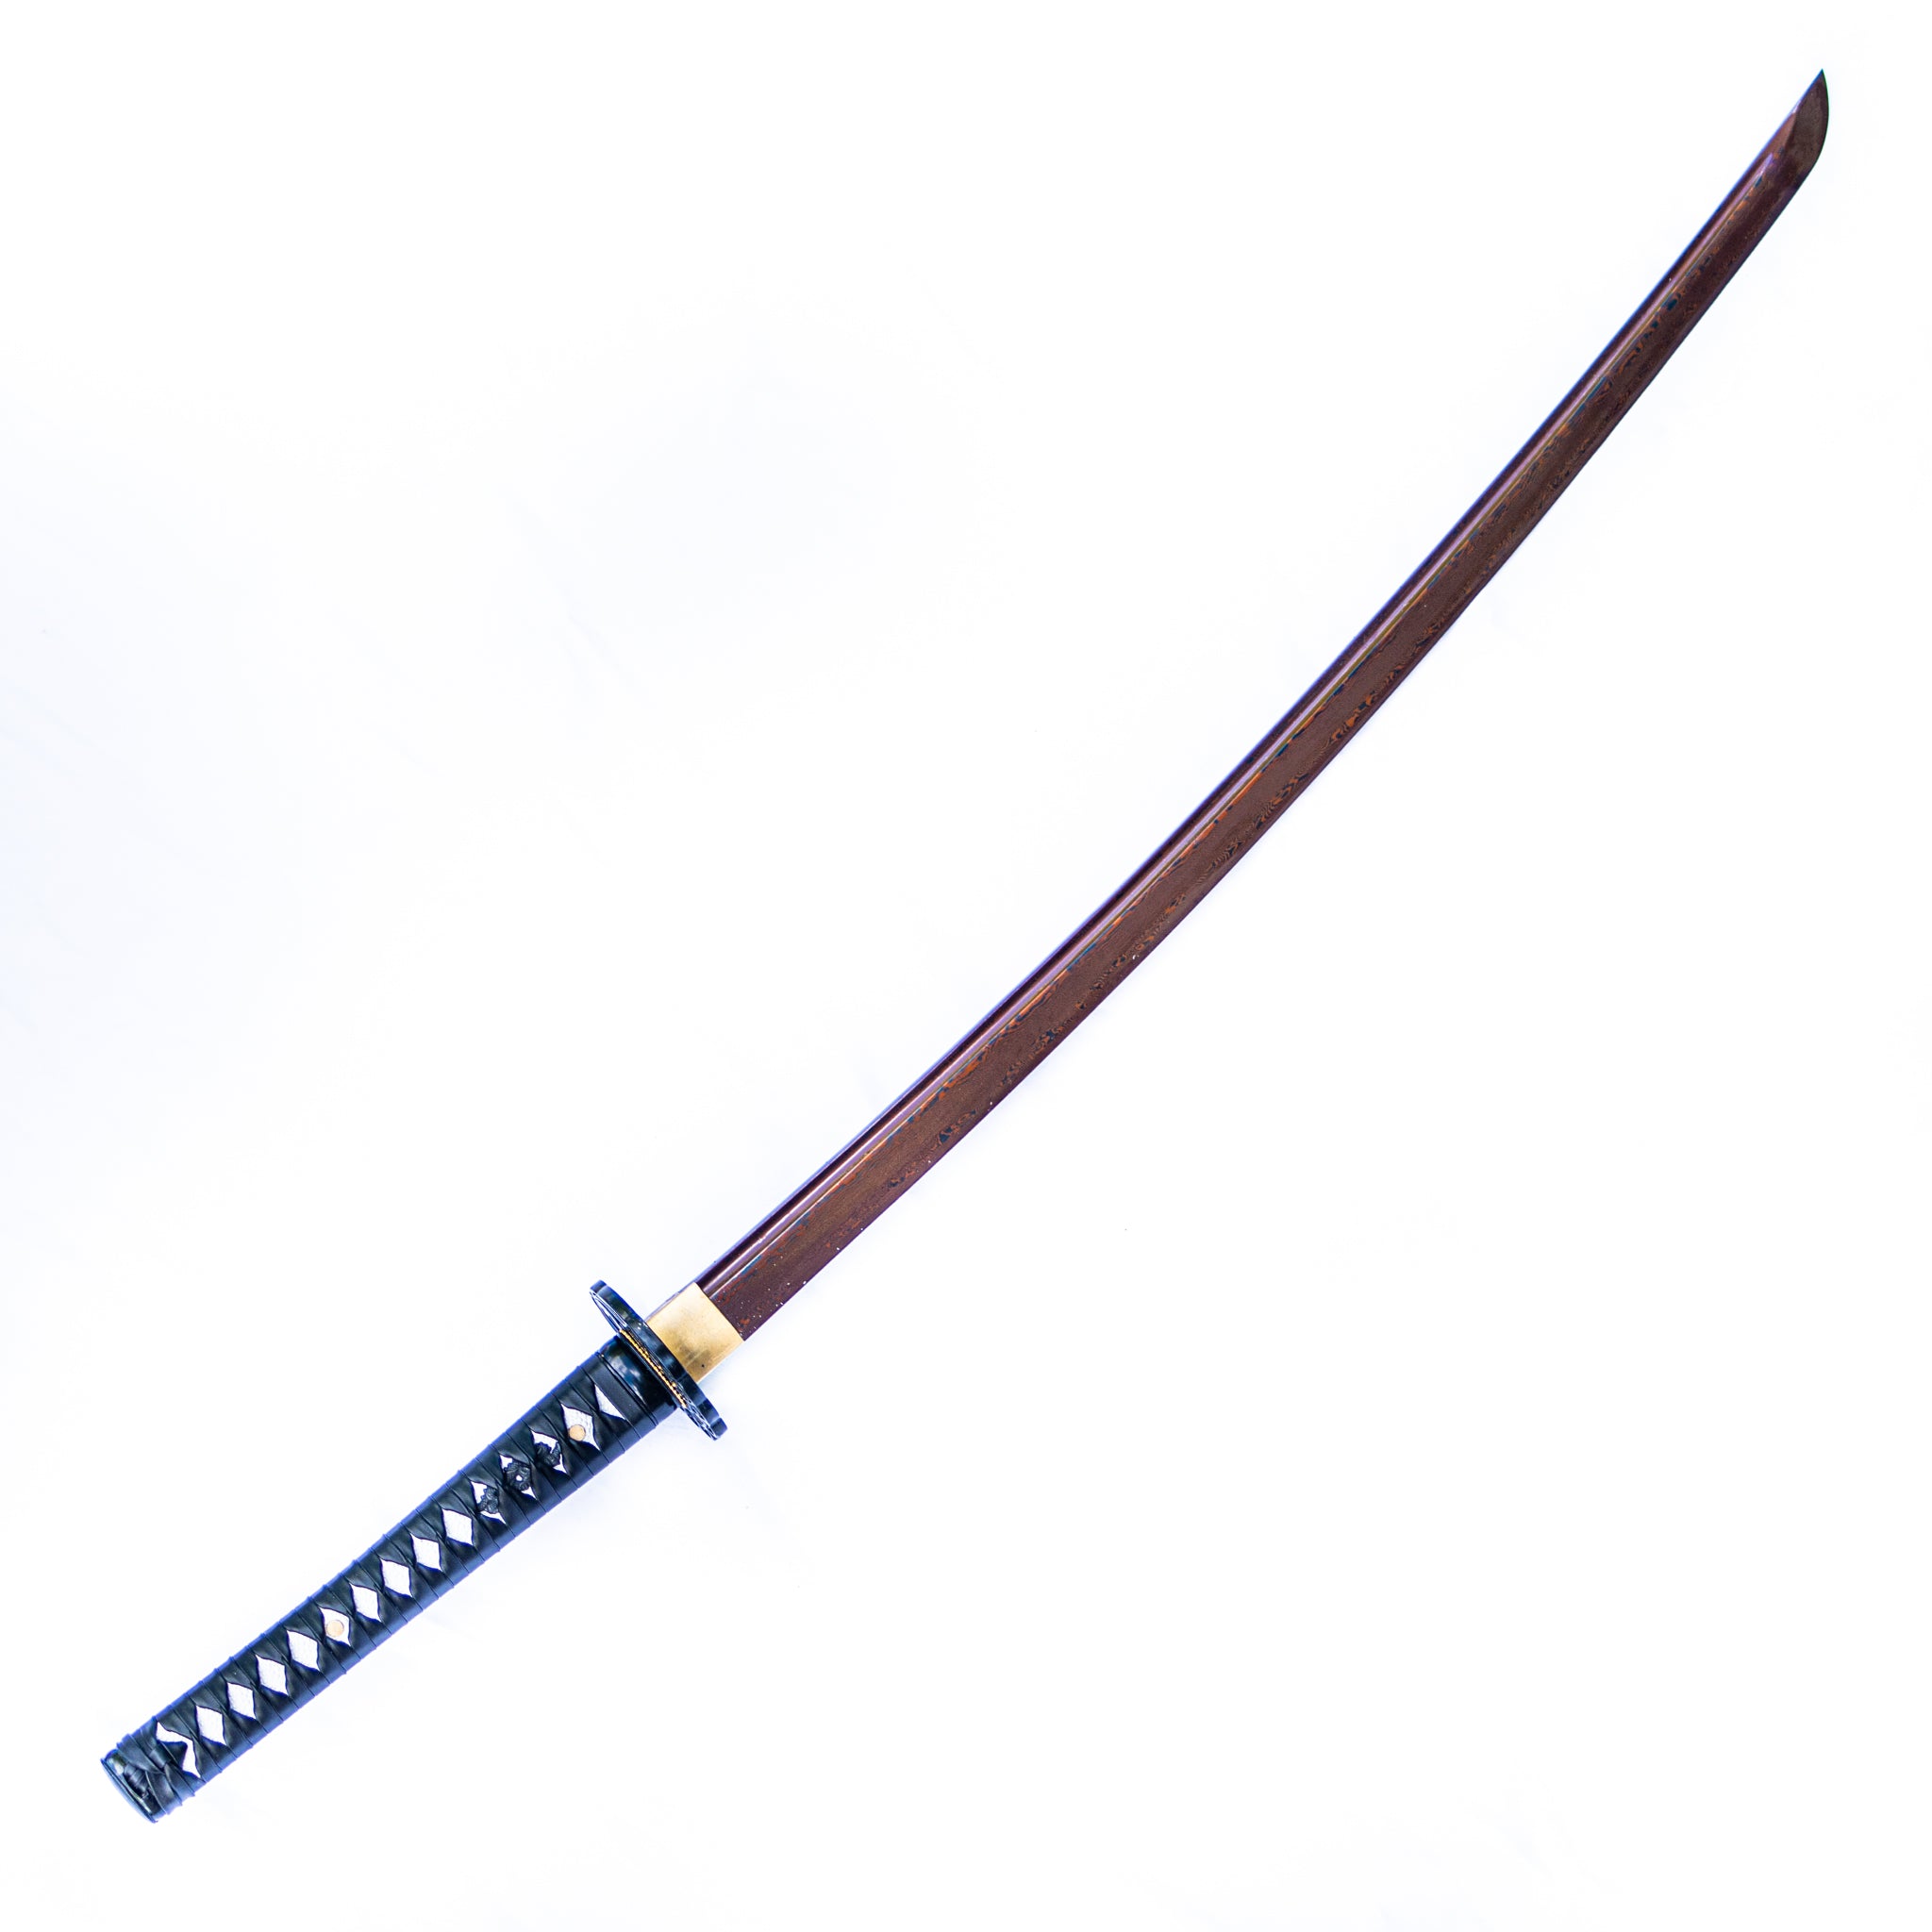 Red Katana Sword High Carbon Damascus Steel Sword 40 5 Samurai Sword Battling Blades